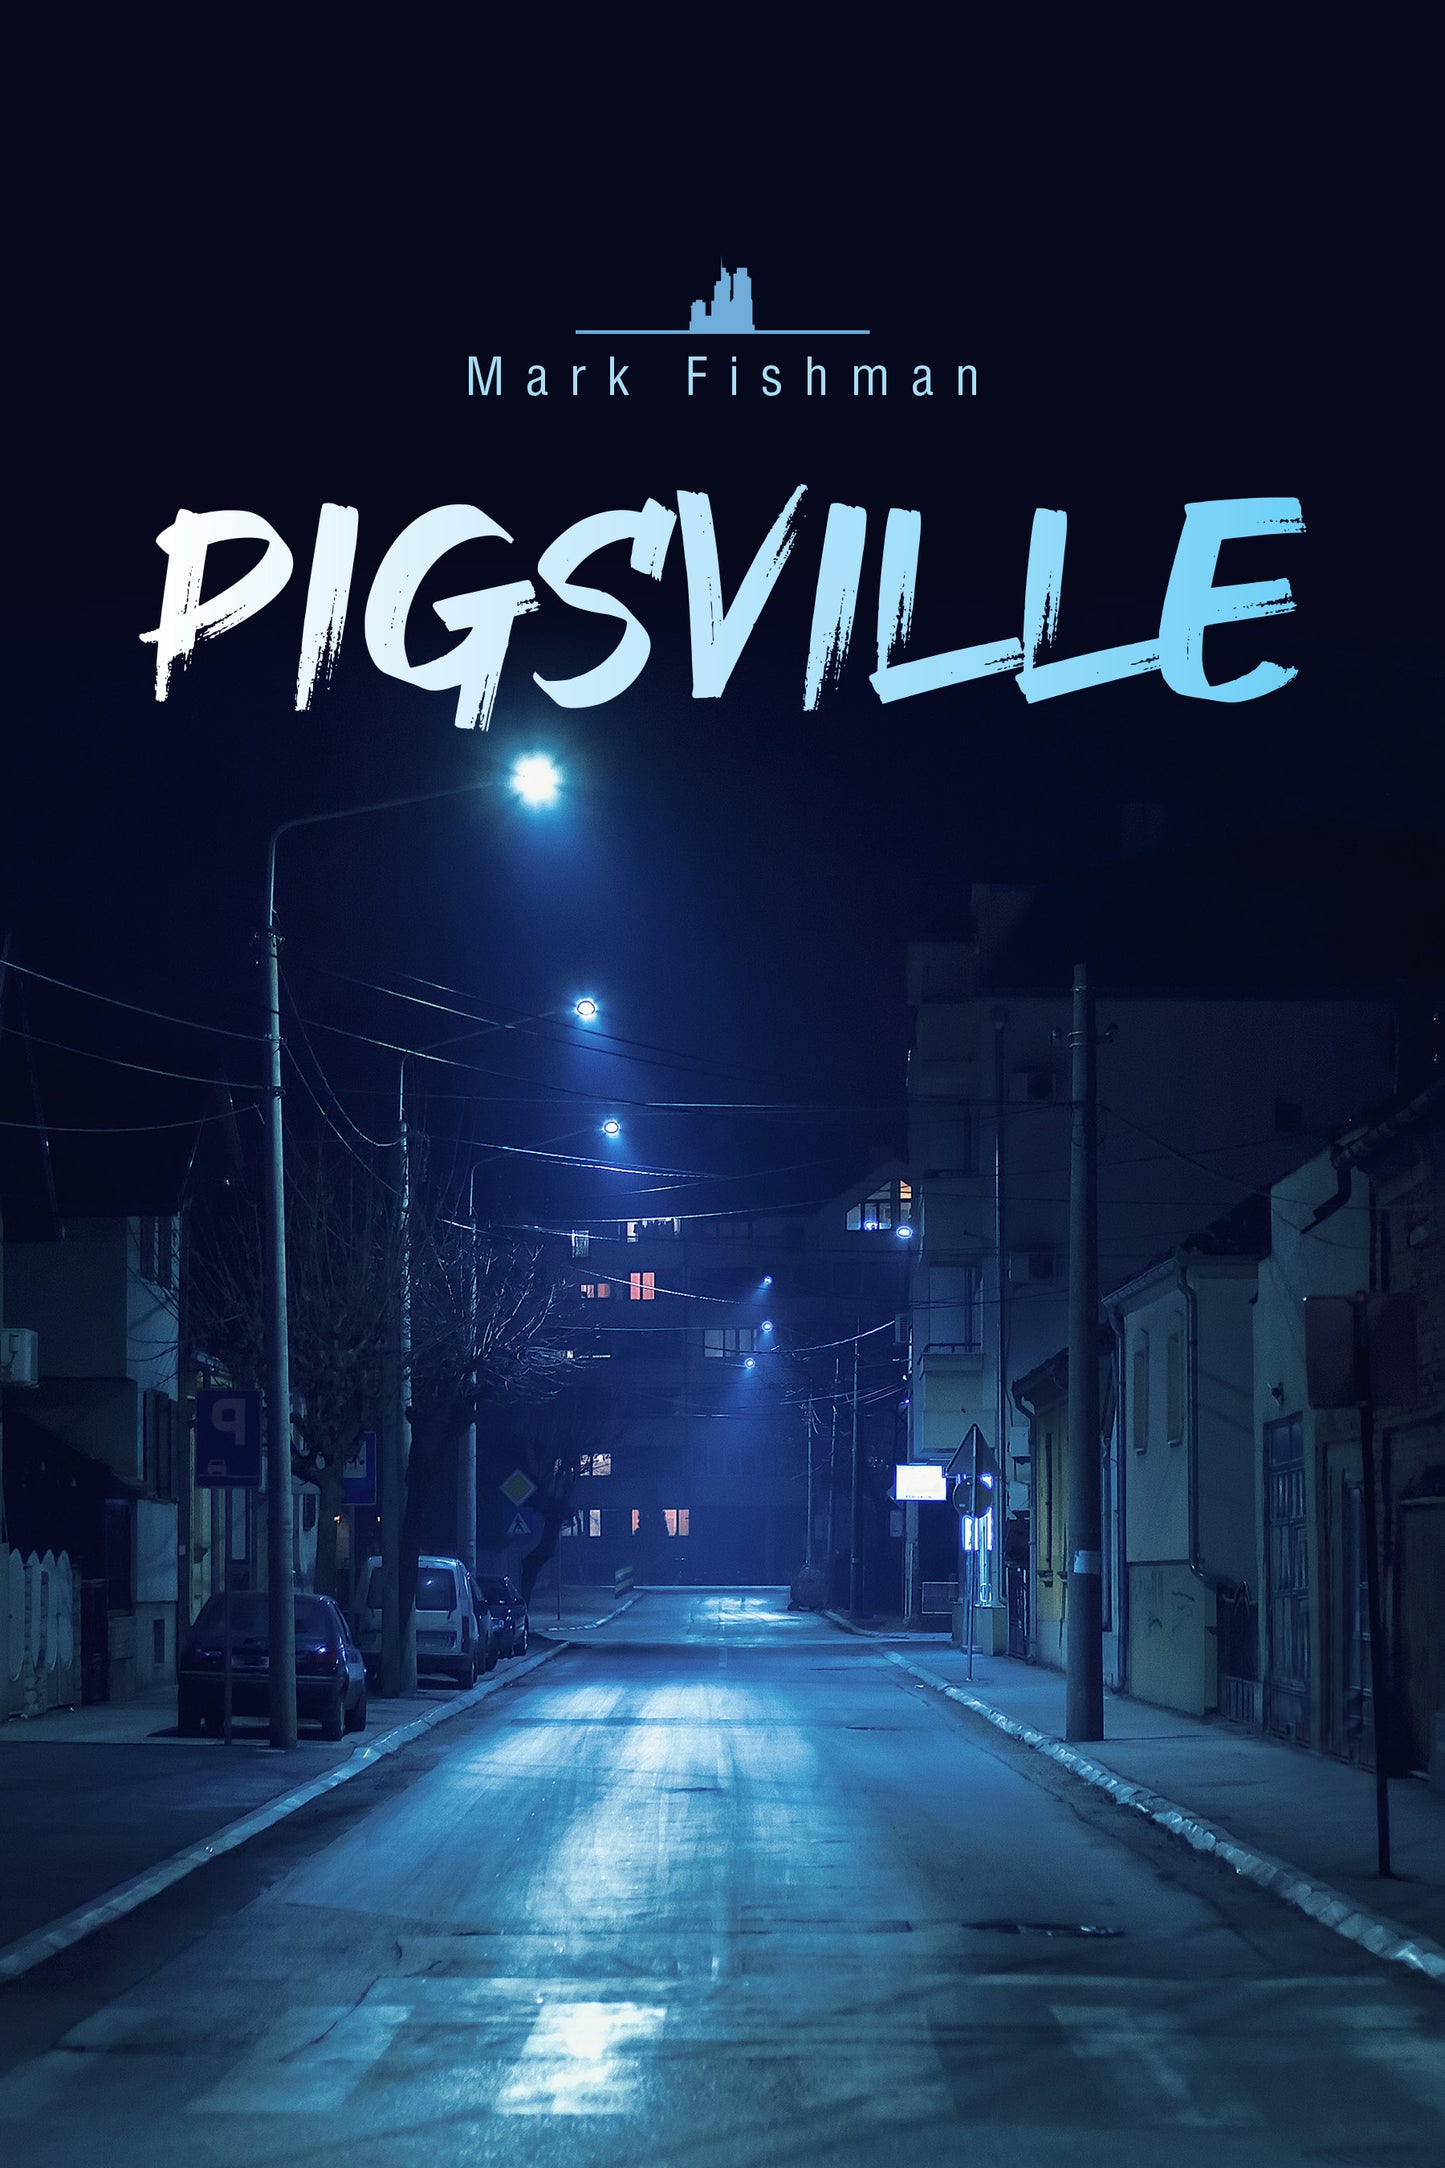 Pigsville